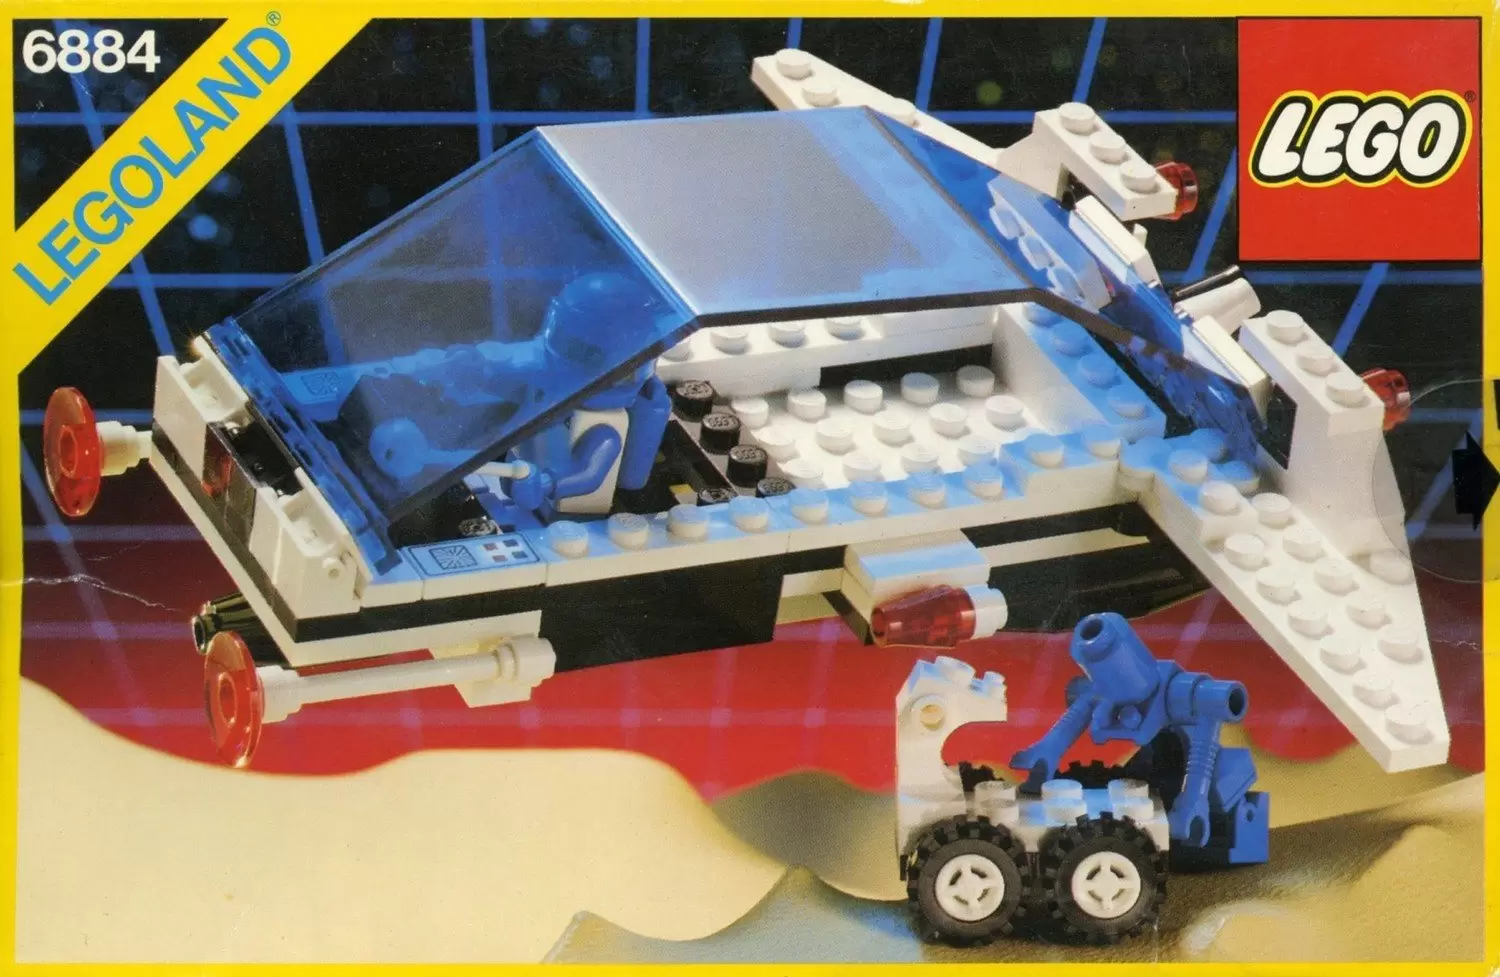 LEGO Space - Aero Module